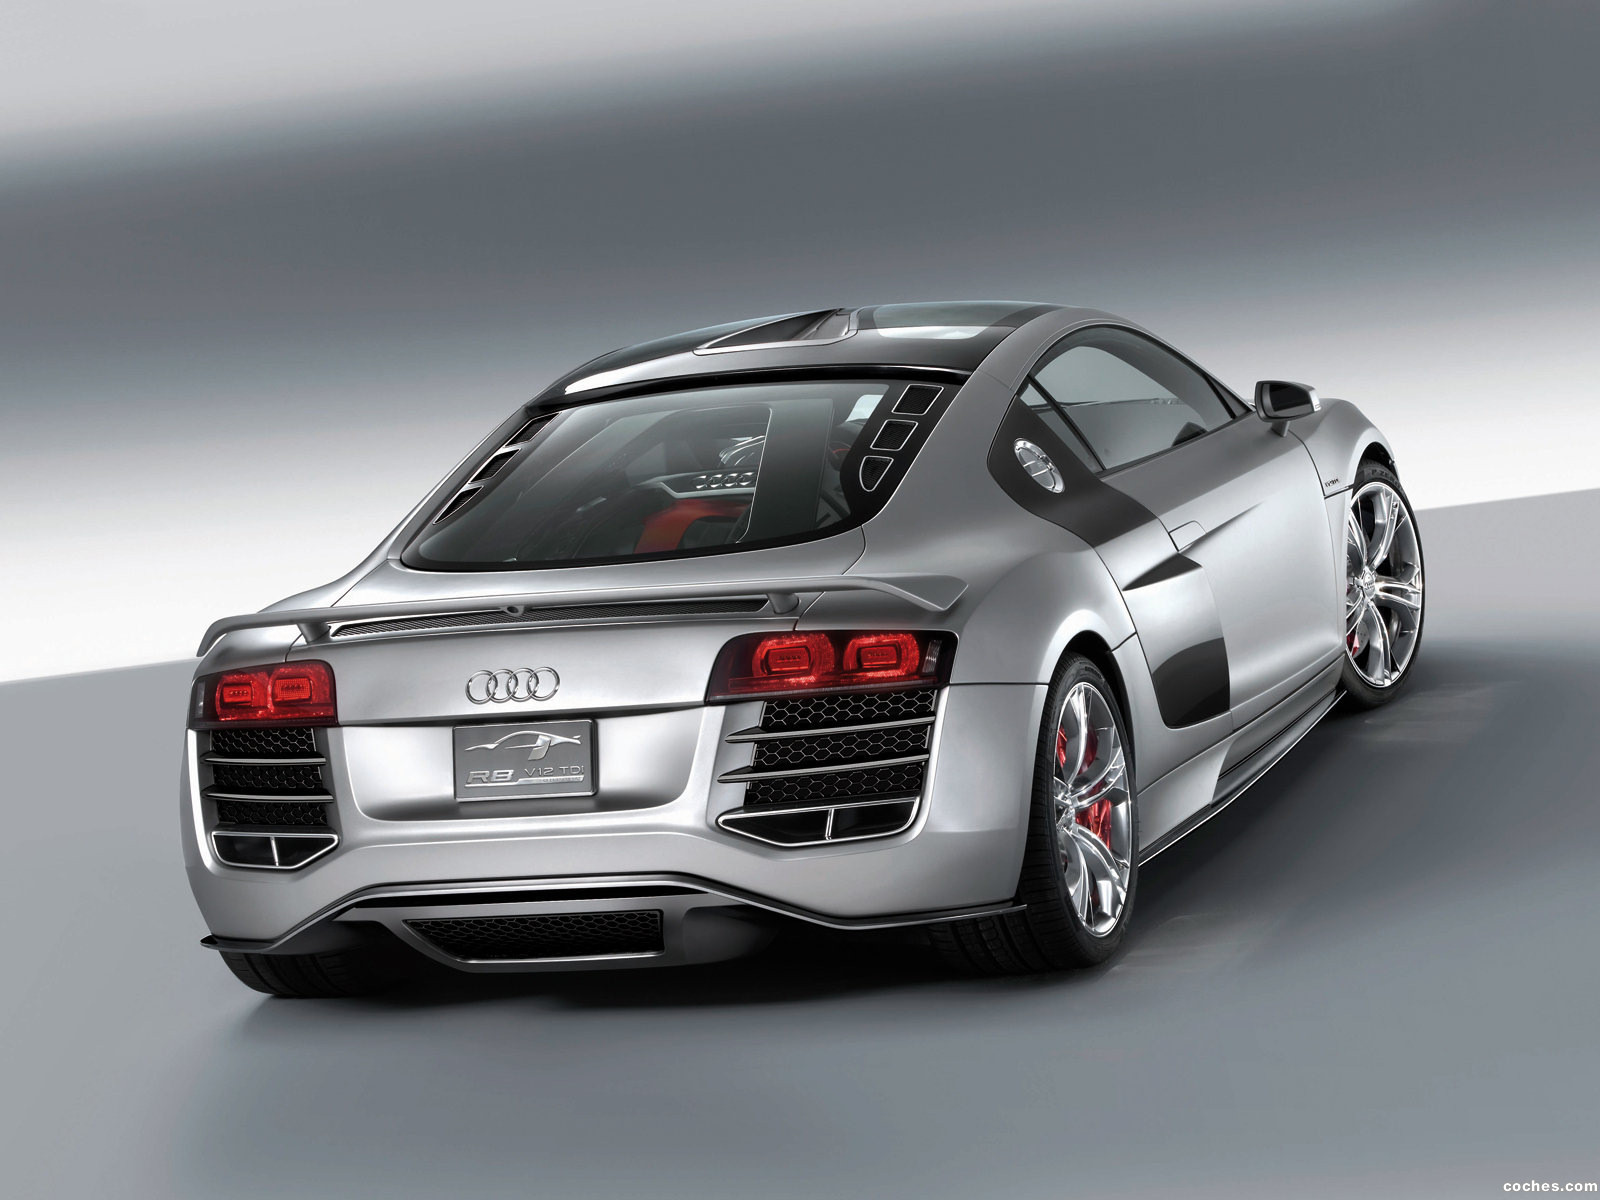 A 12 Cylinder Beast: The 2008 Audi R8 V12 TDI Concept